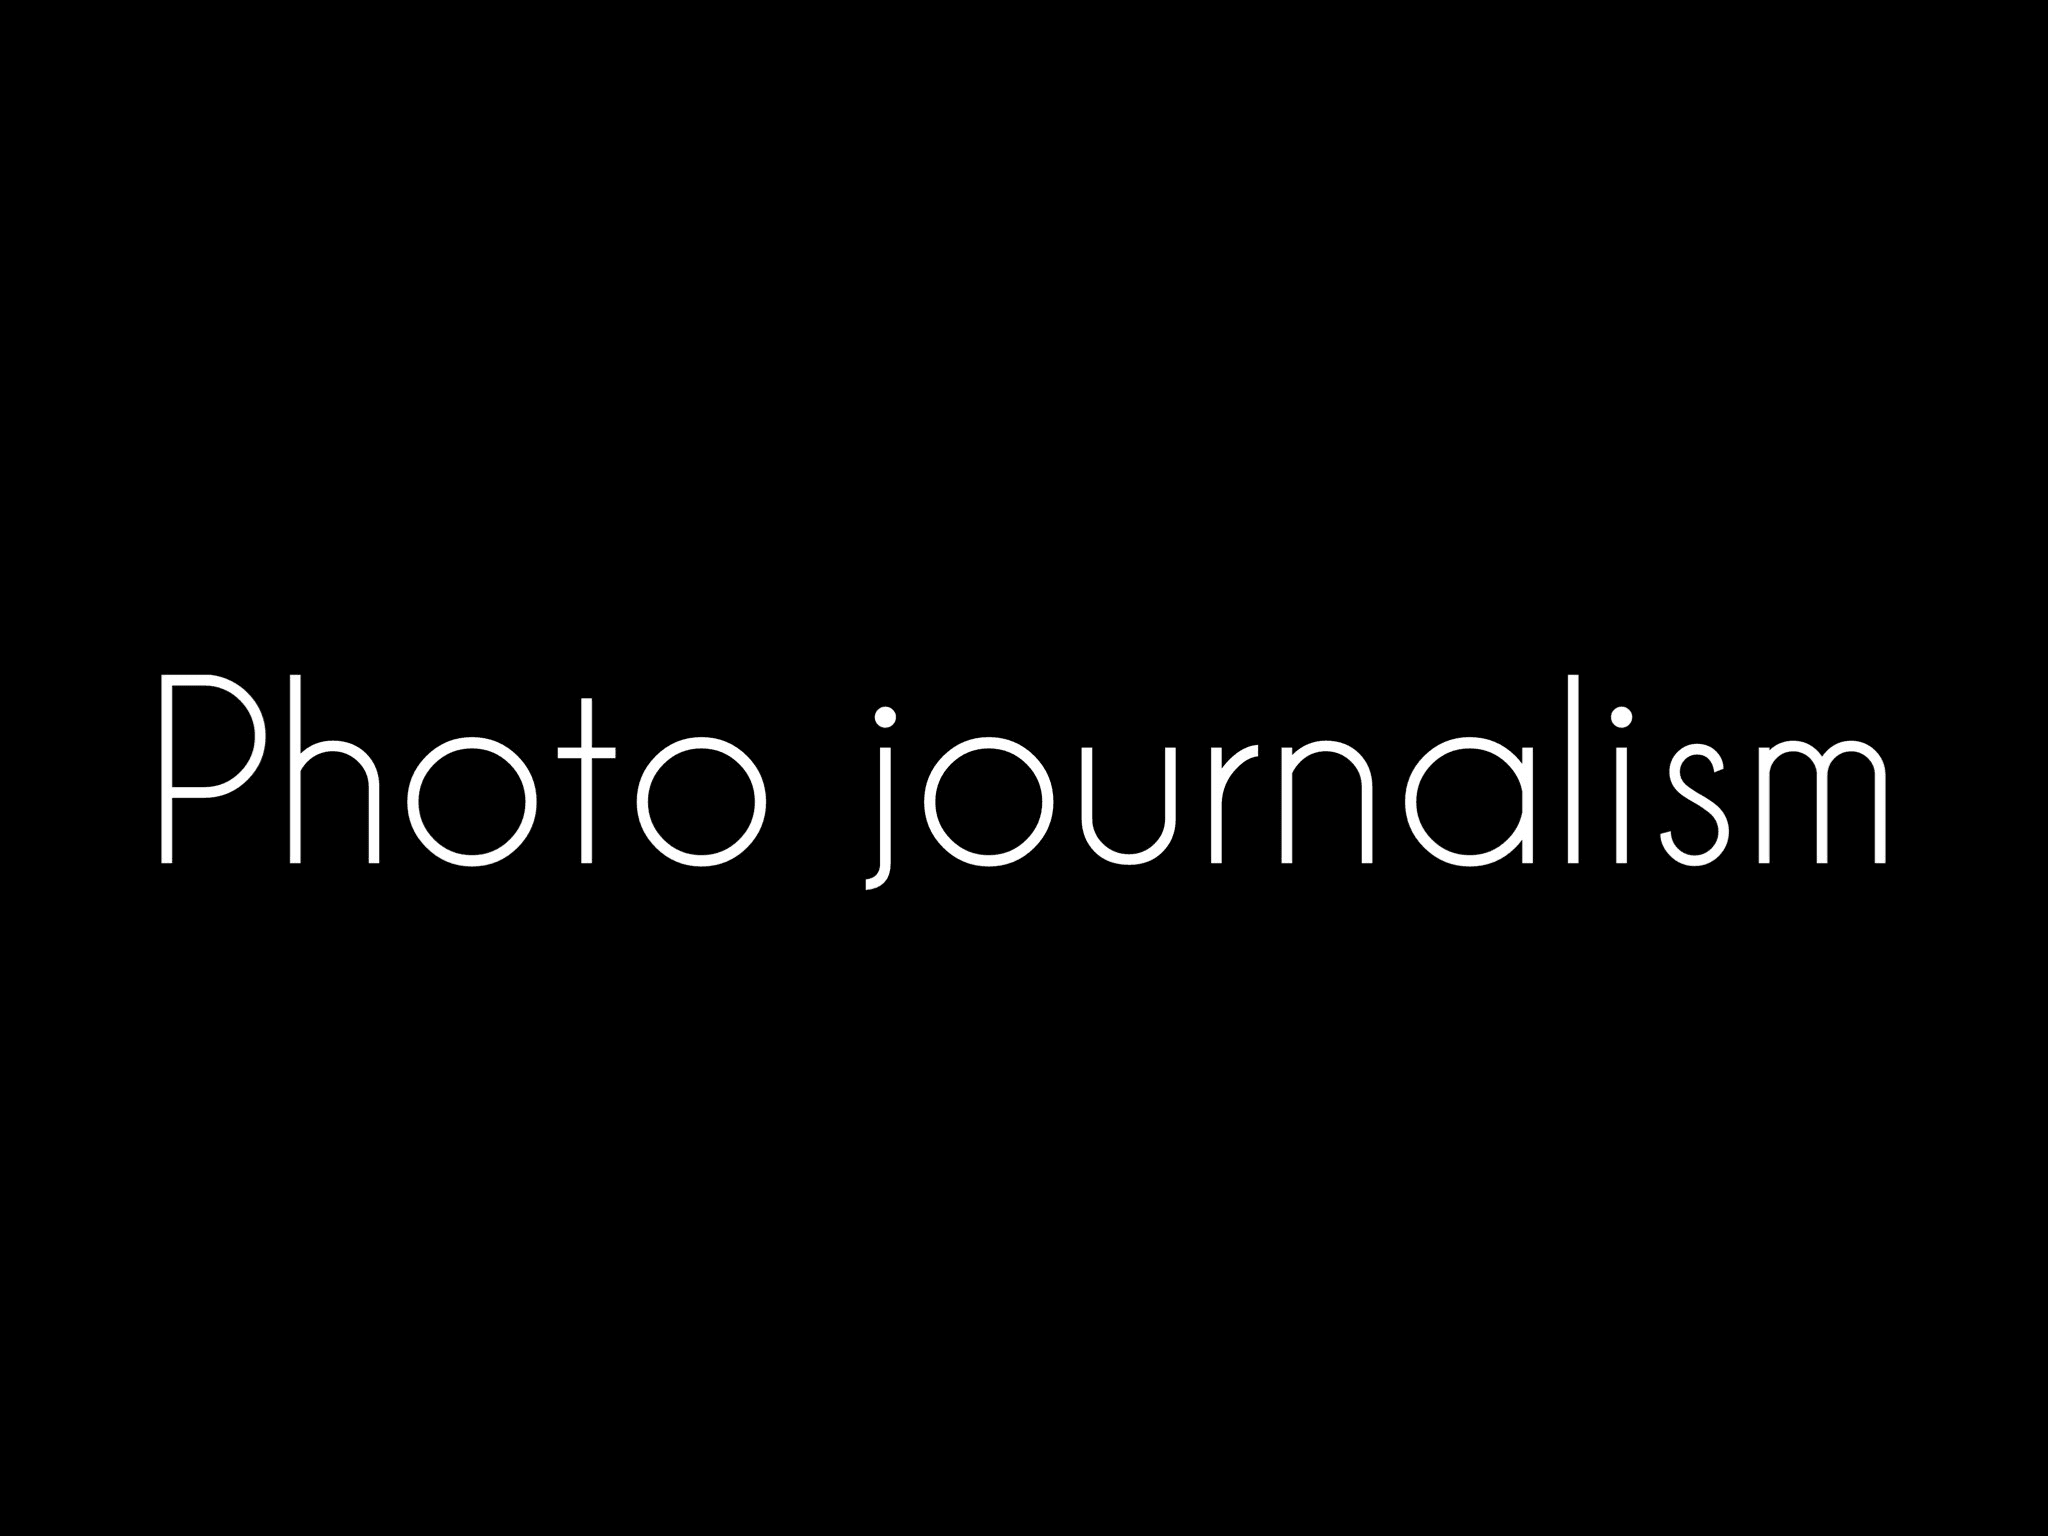 Photo journalism